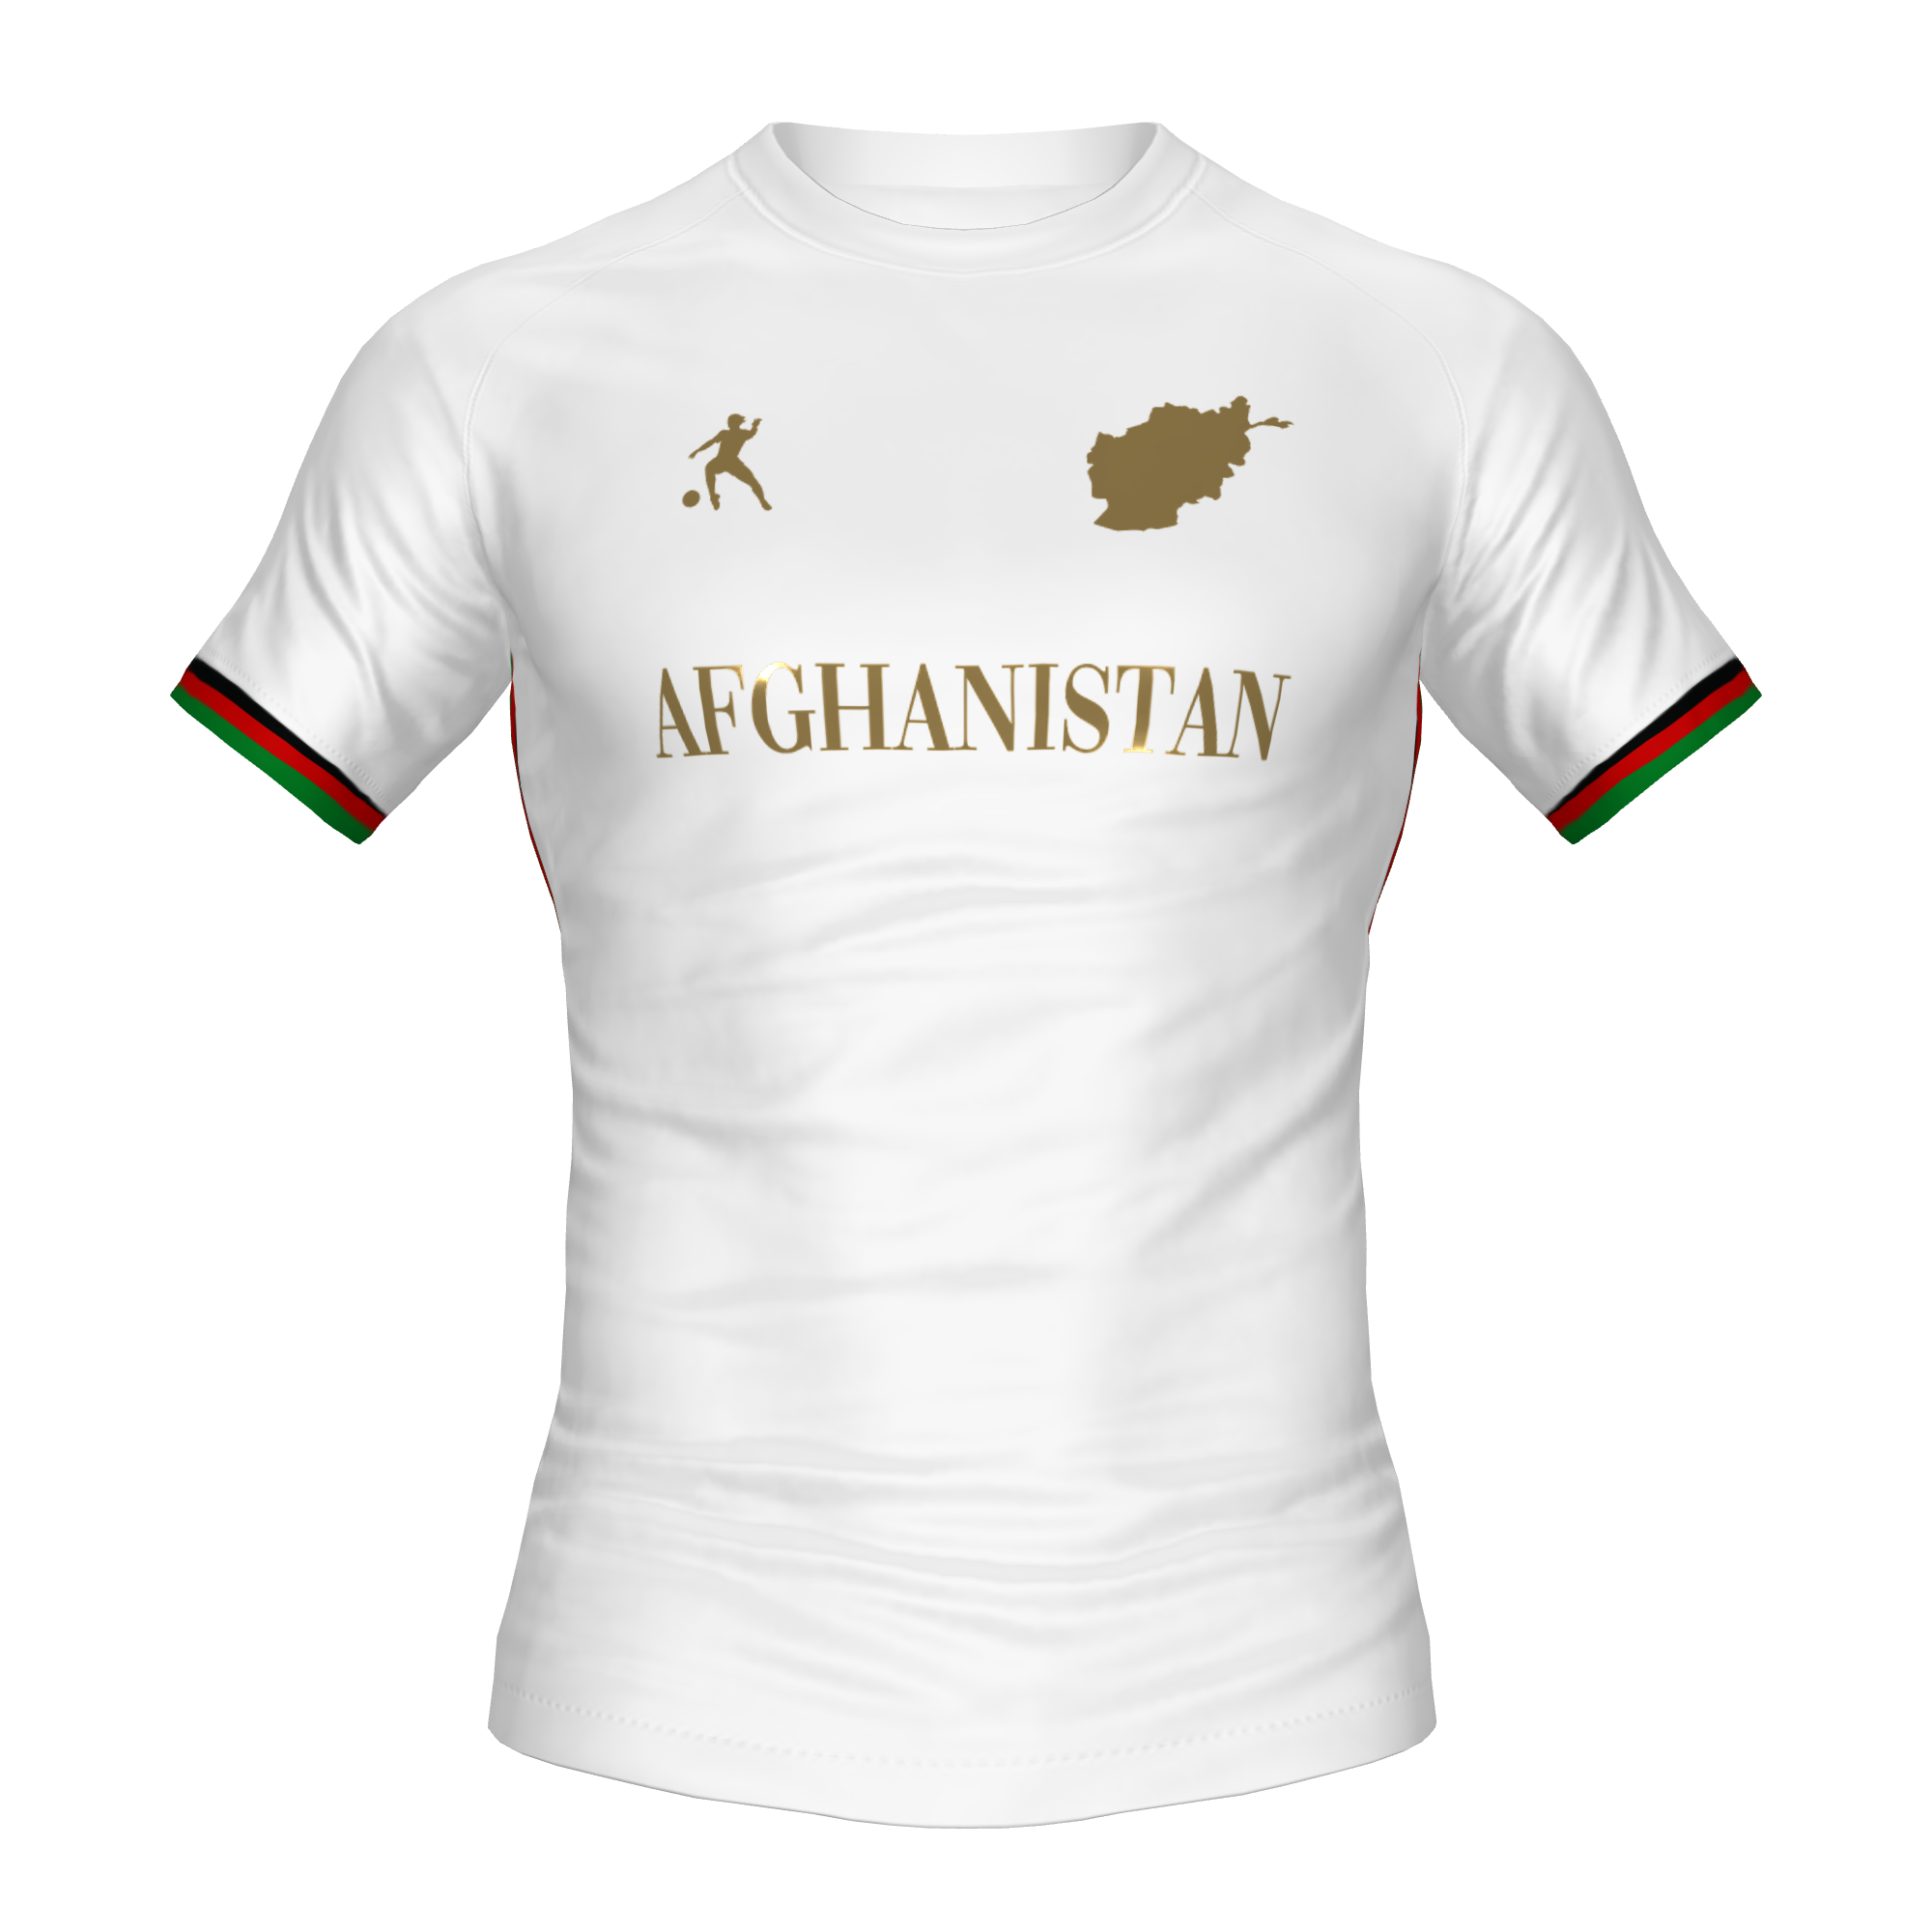 AFGHANISTAN FOOTBALL SHIRT - LAIB